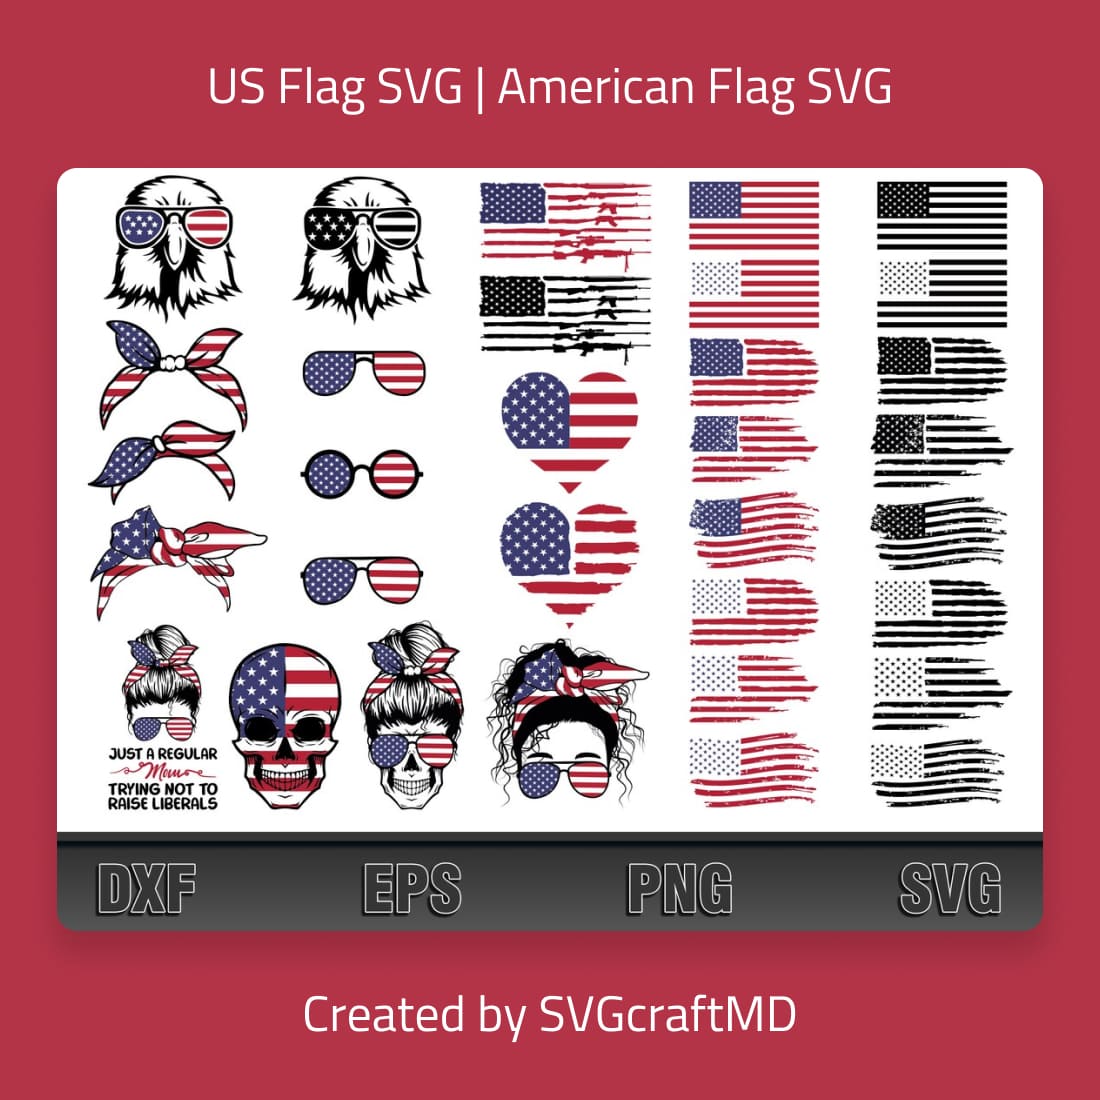 Distressed American flag Baseball shirt design svg